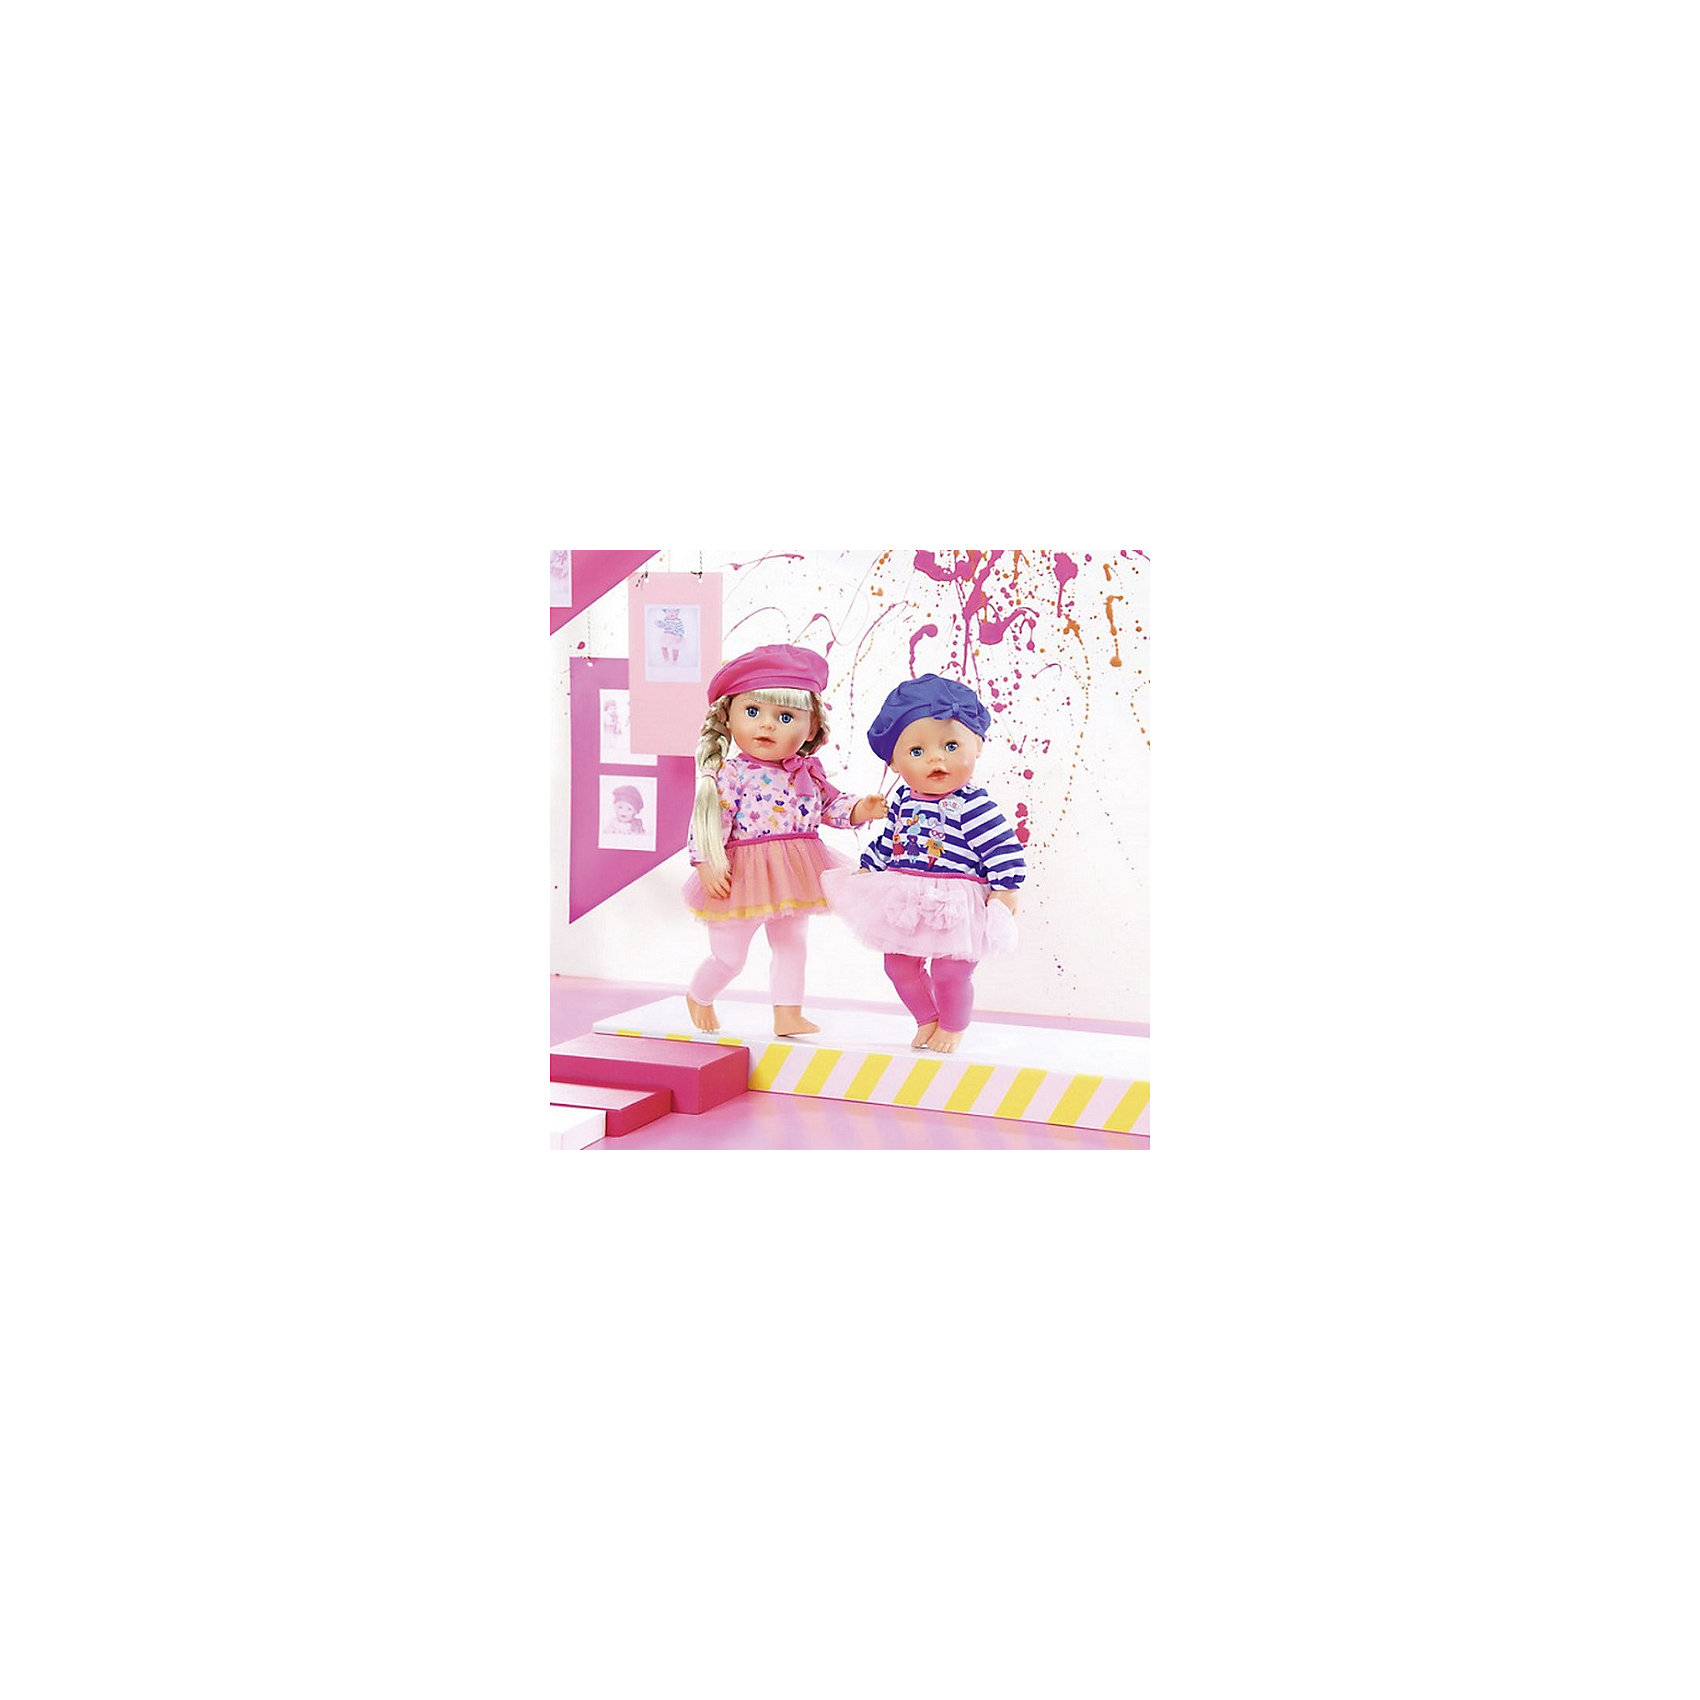 Одежда для куклы BABY born "В погоне за модой", розового цвета Zapf Creation 8596874